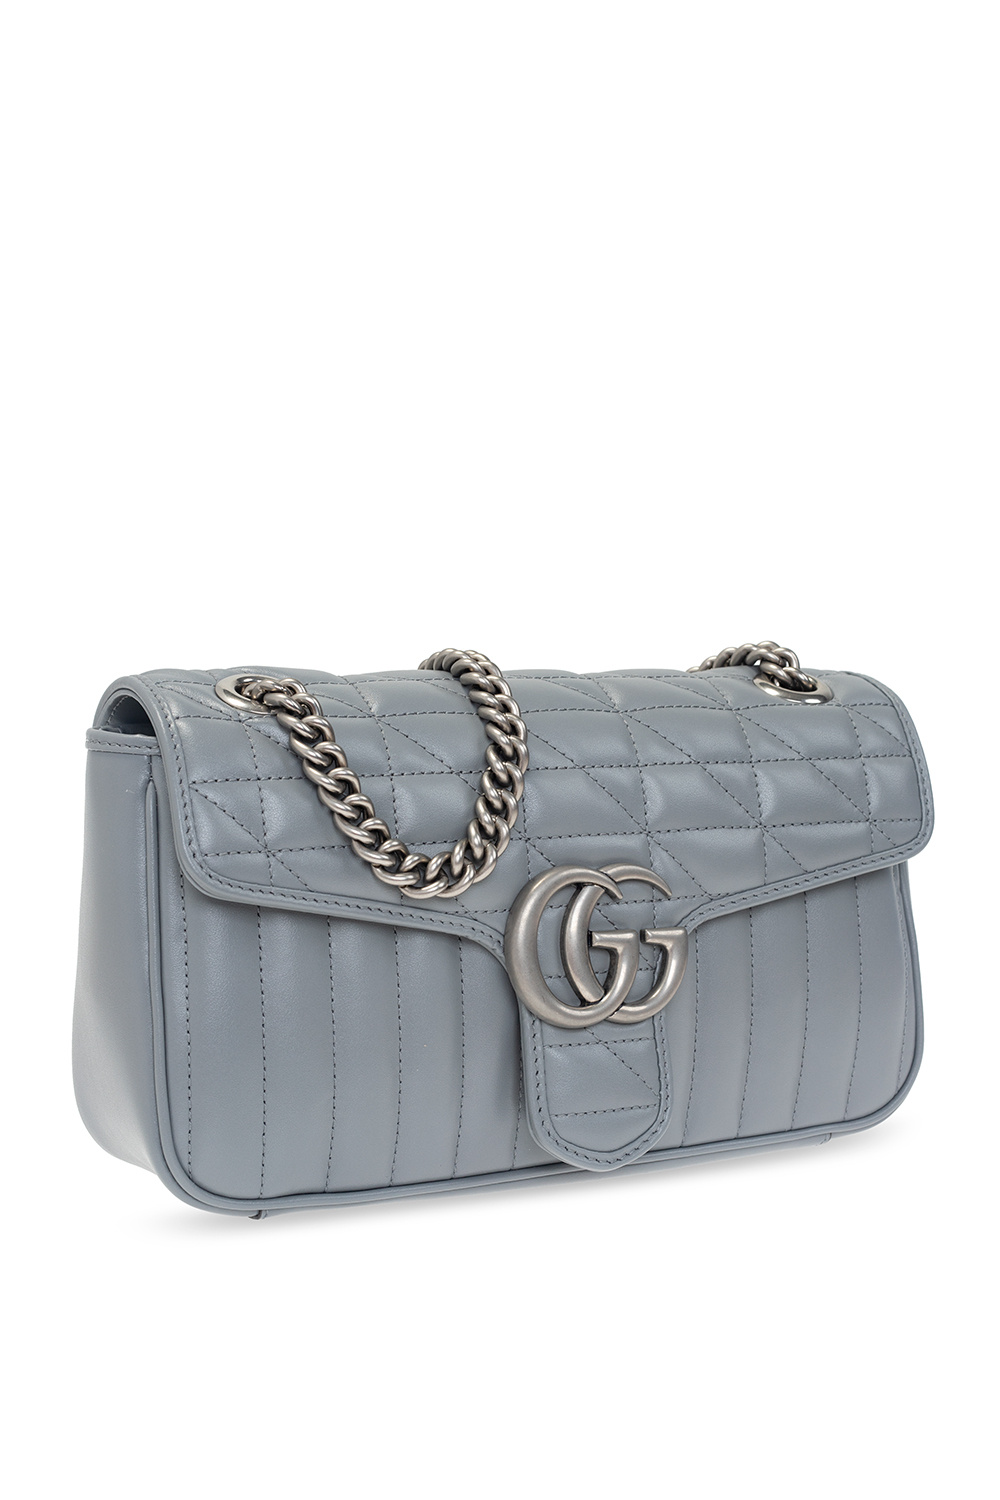 Gucci 1711 grey Small Leather Marmont Matelassé Shoulder Bag